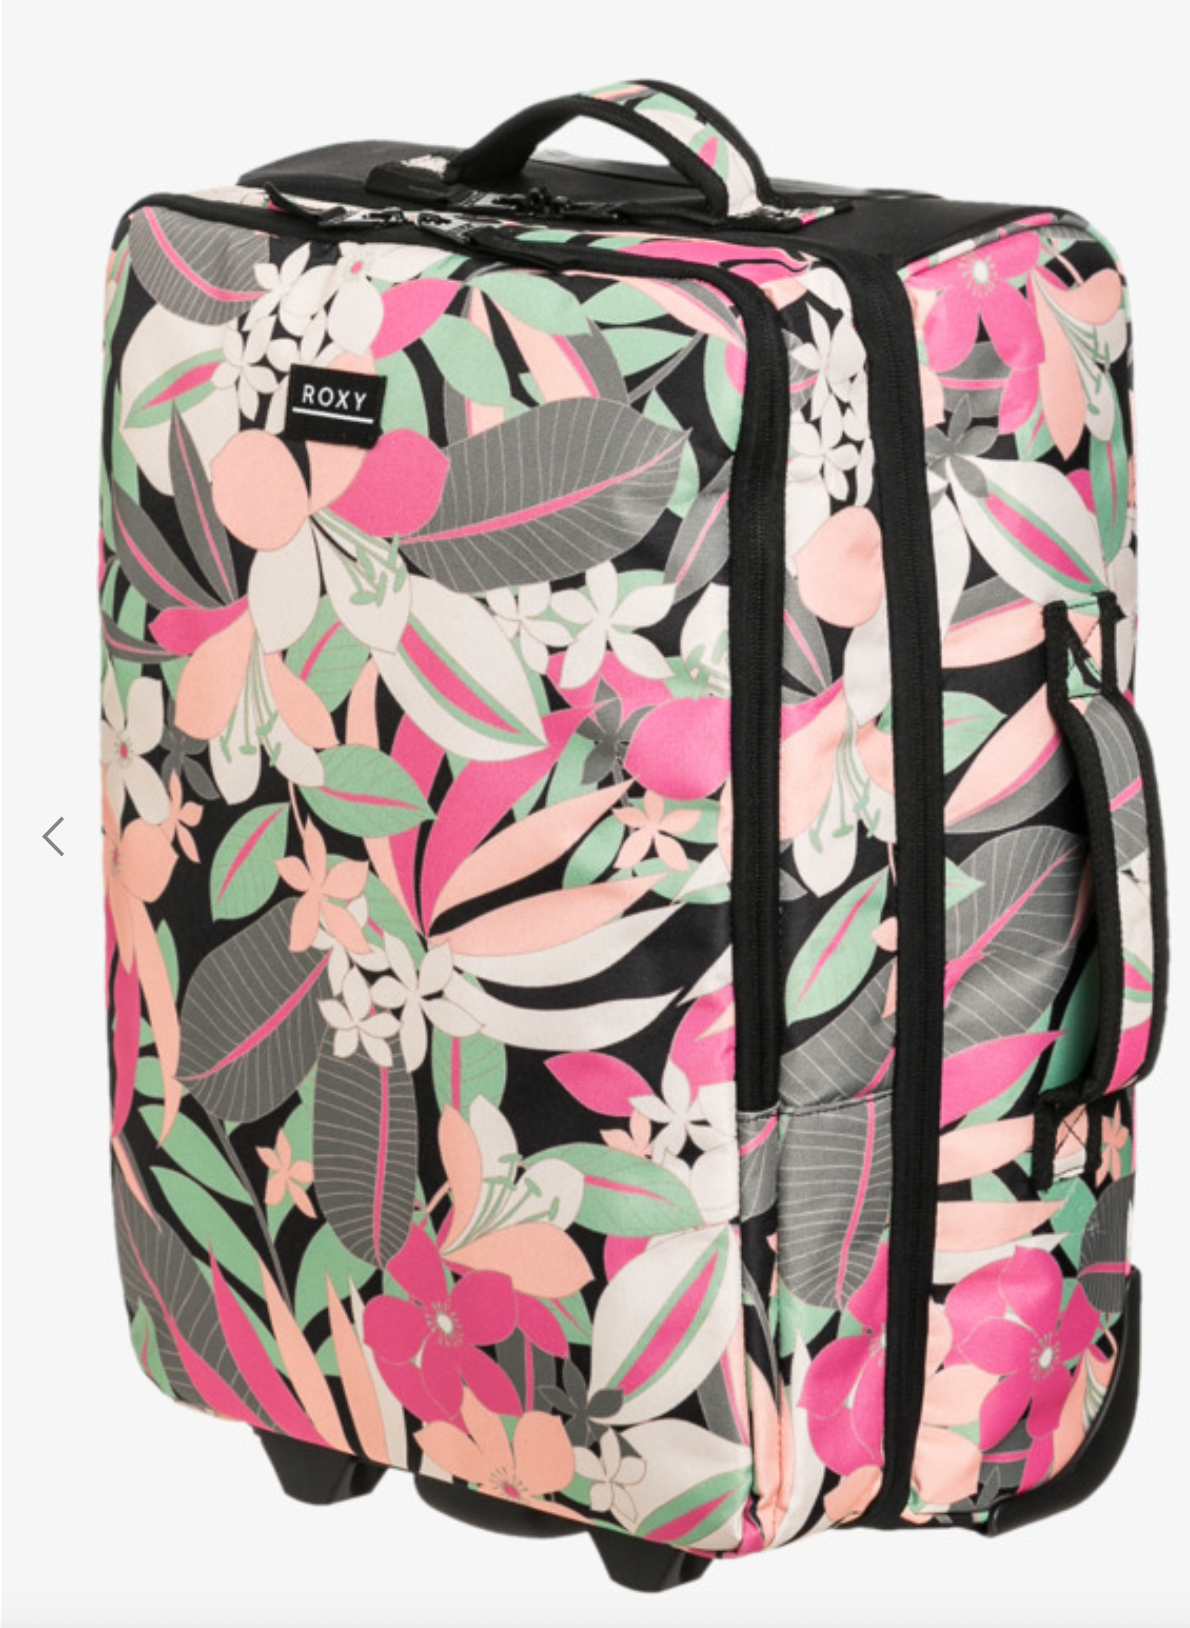 ROXY Cabin Paradise - Small Wheelie Suitcase for Women